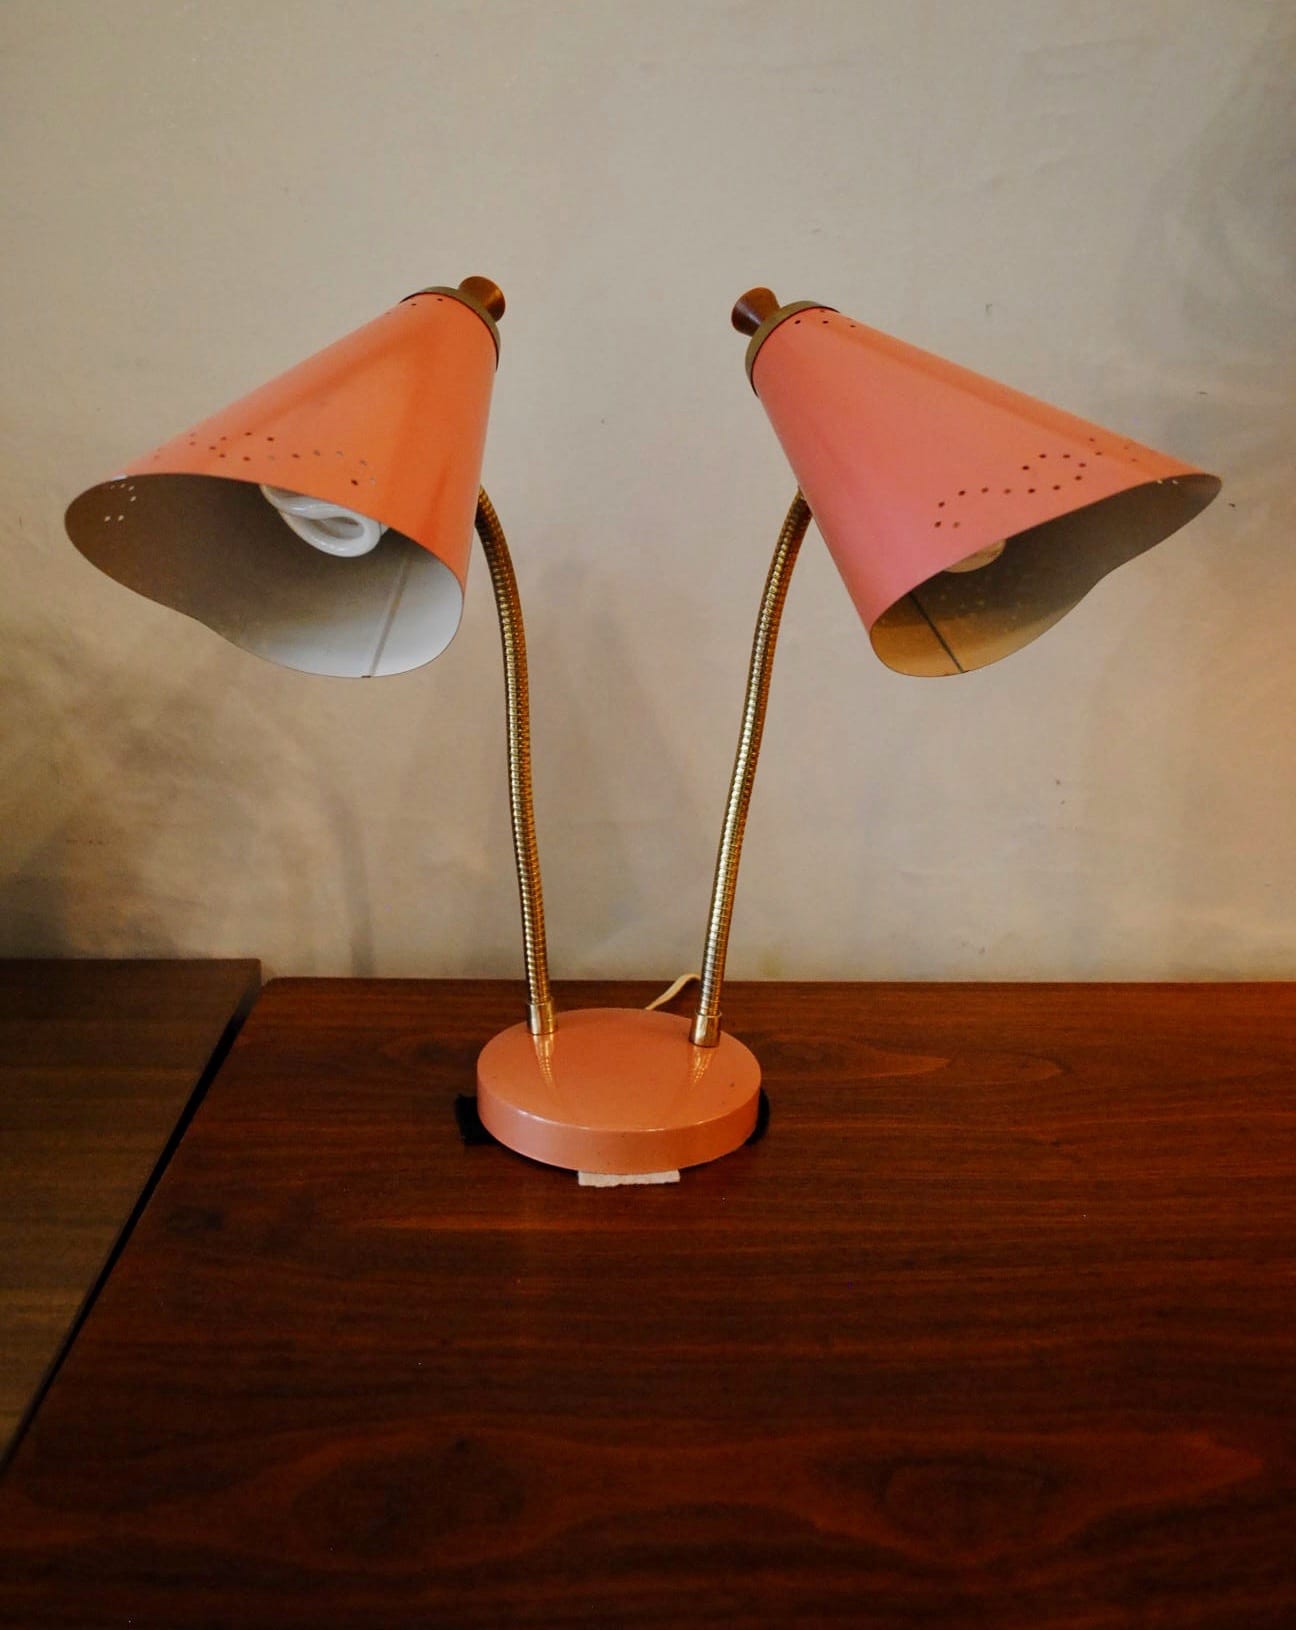 double gooseneck desk lamp